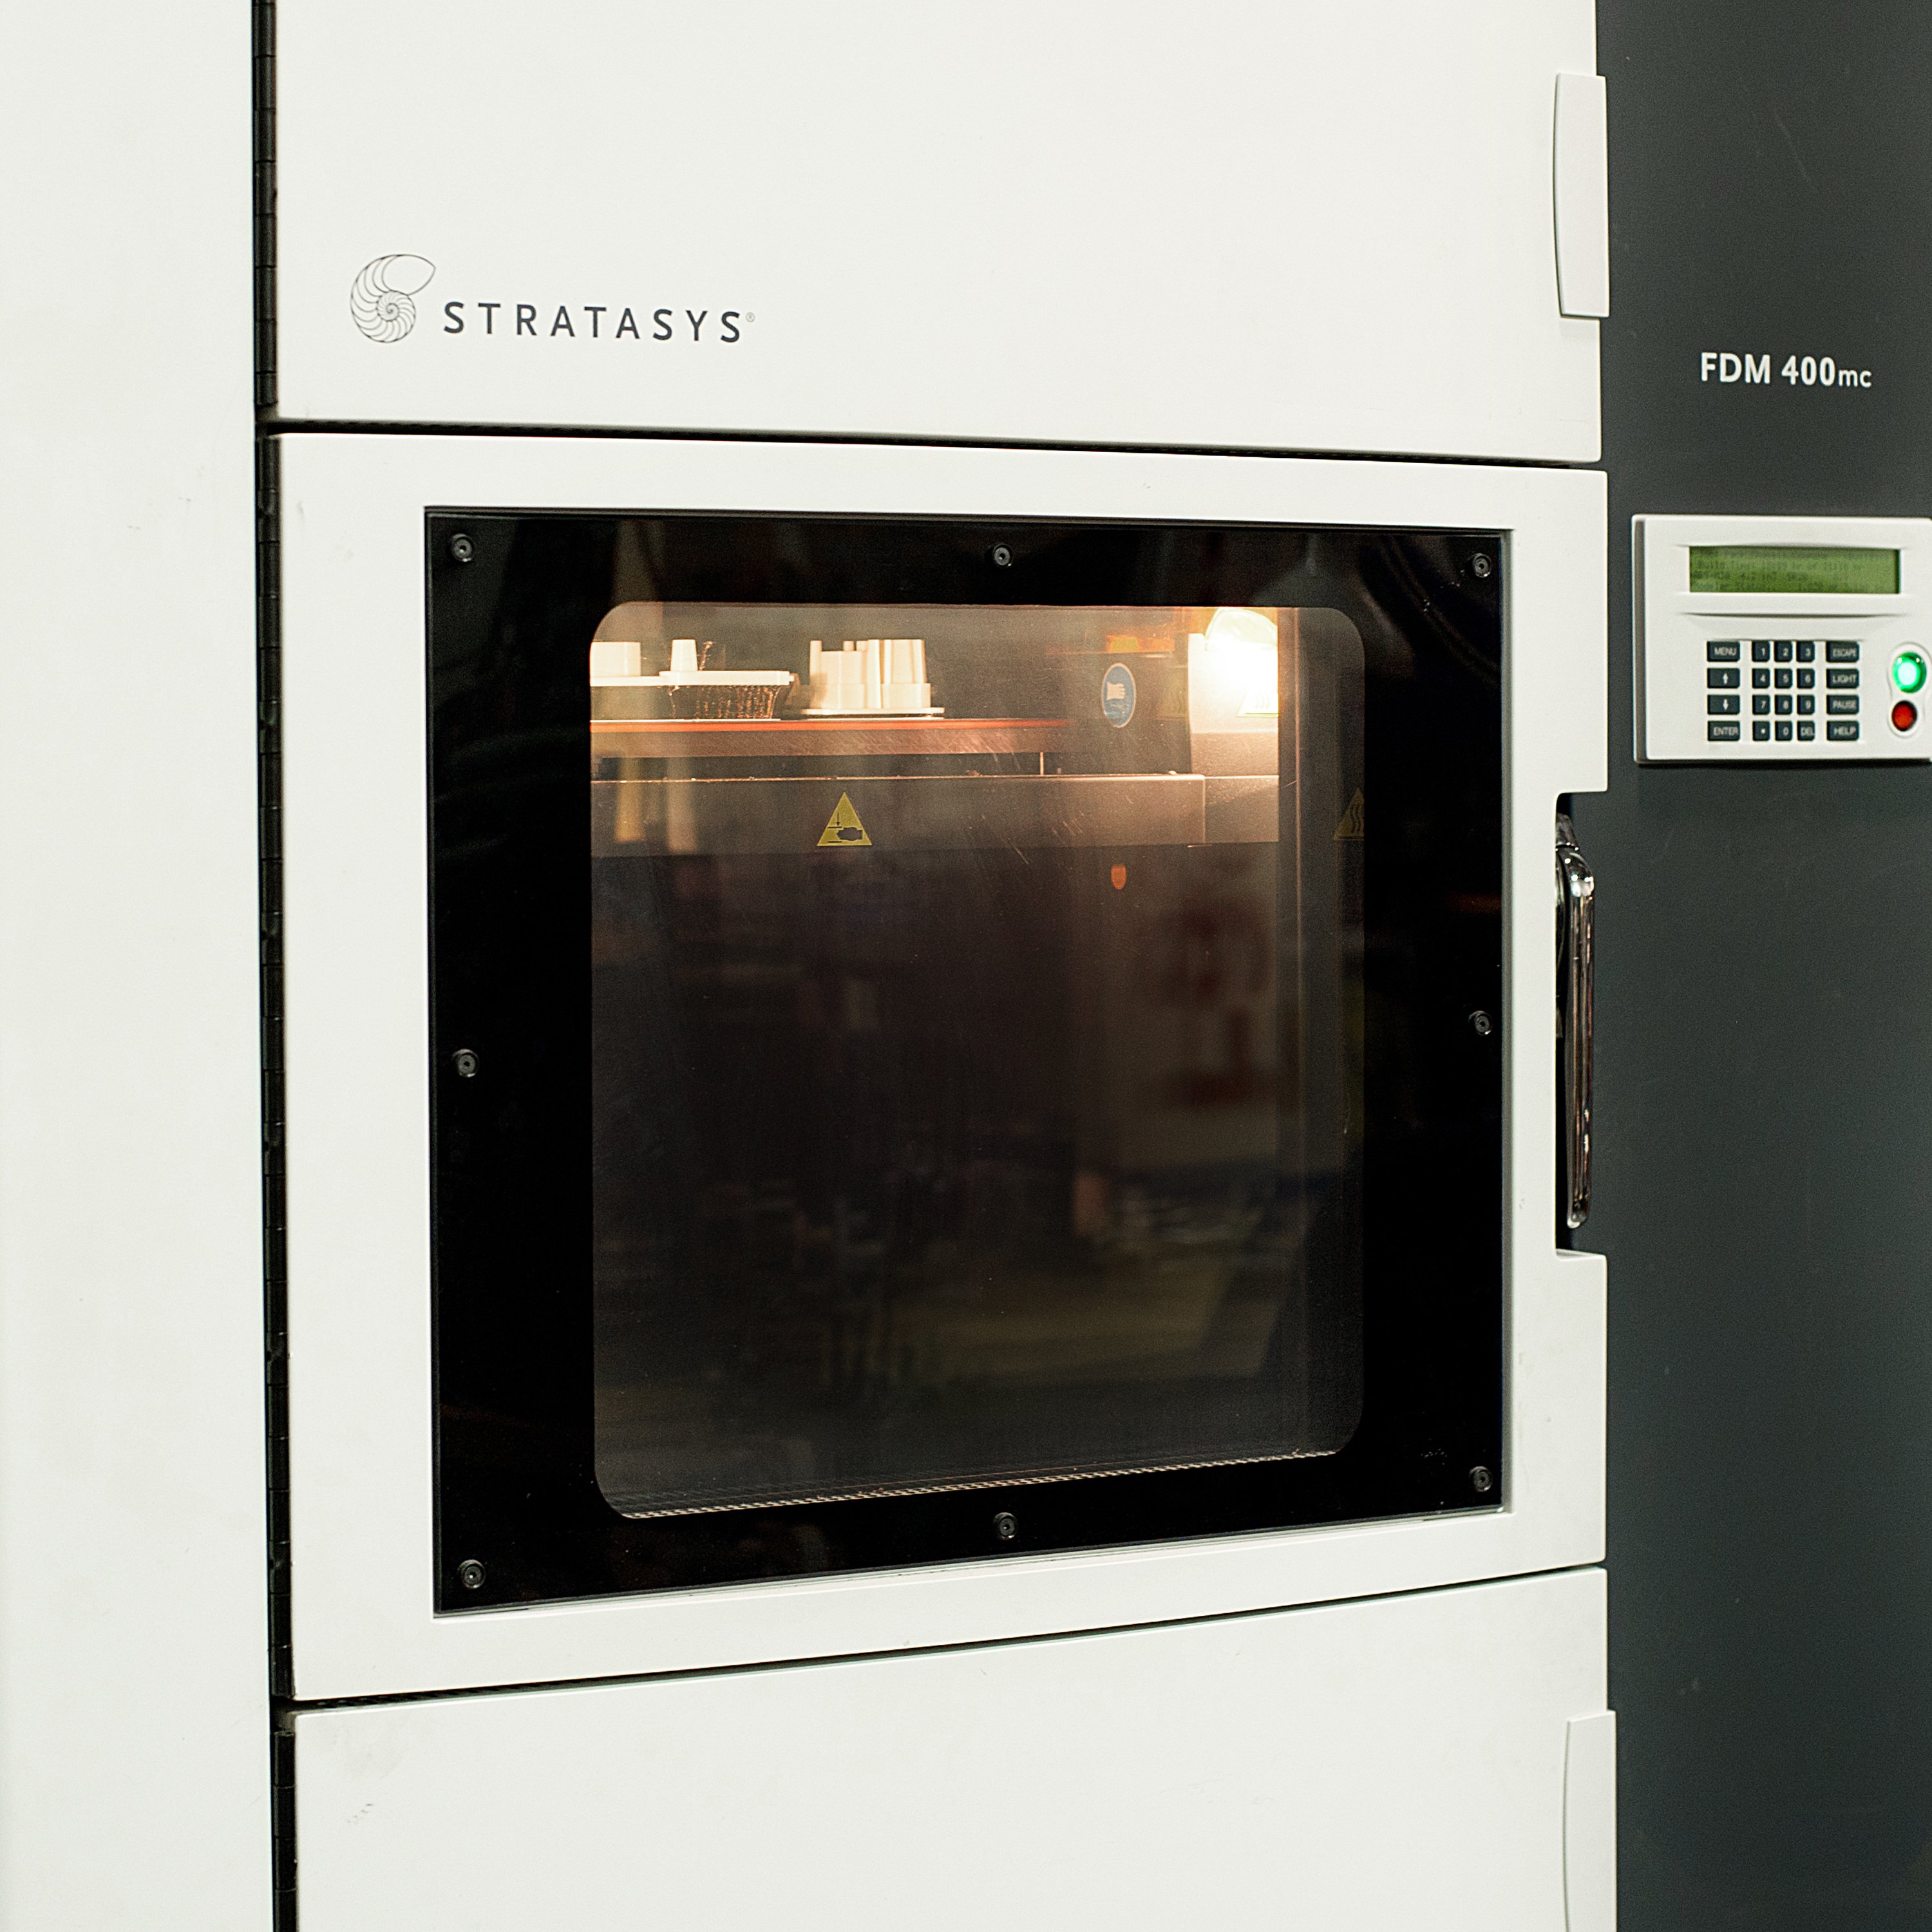 Stratasys FDM400mc 3D printer